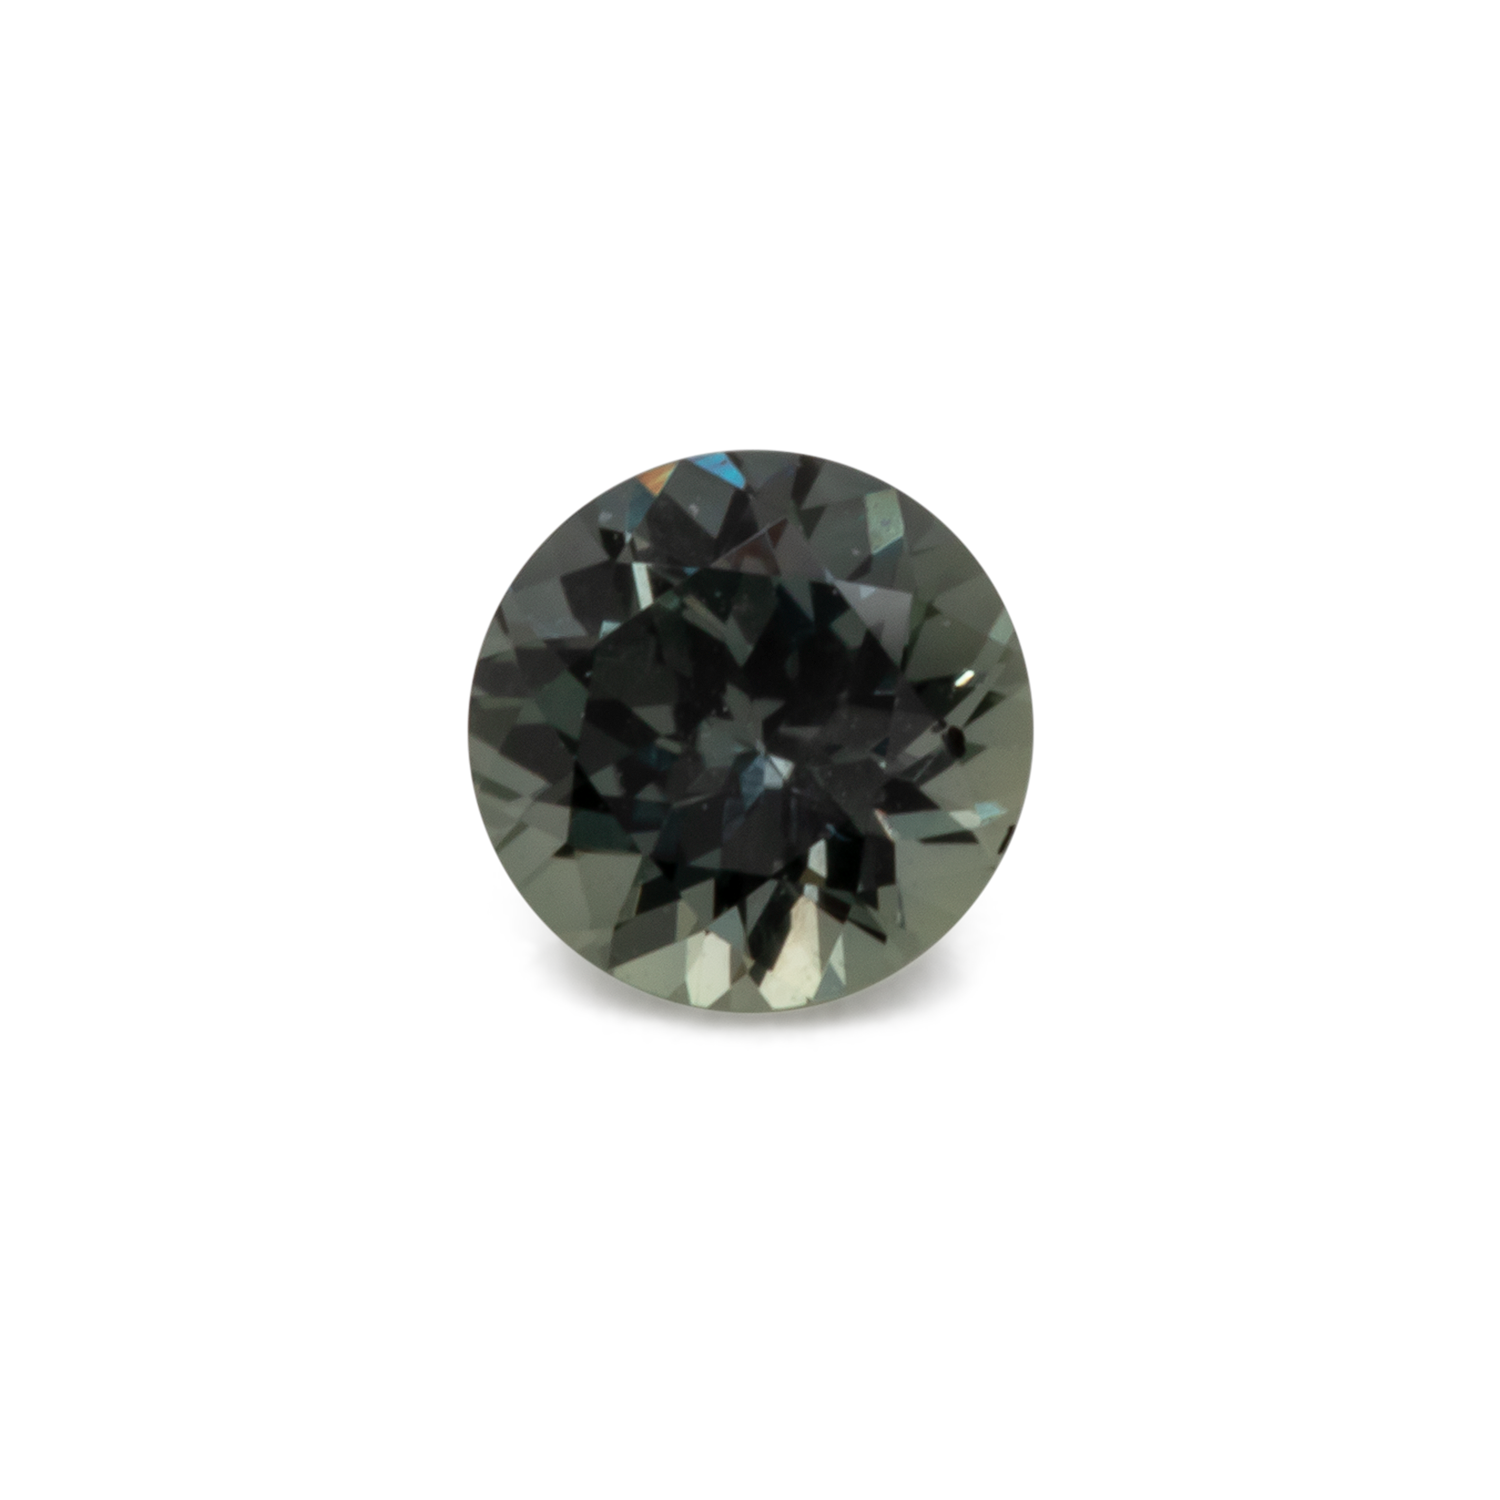 Sapphire - grey, round, 4x4 mm, 0.32 cts, No. XSR11219